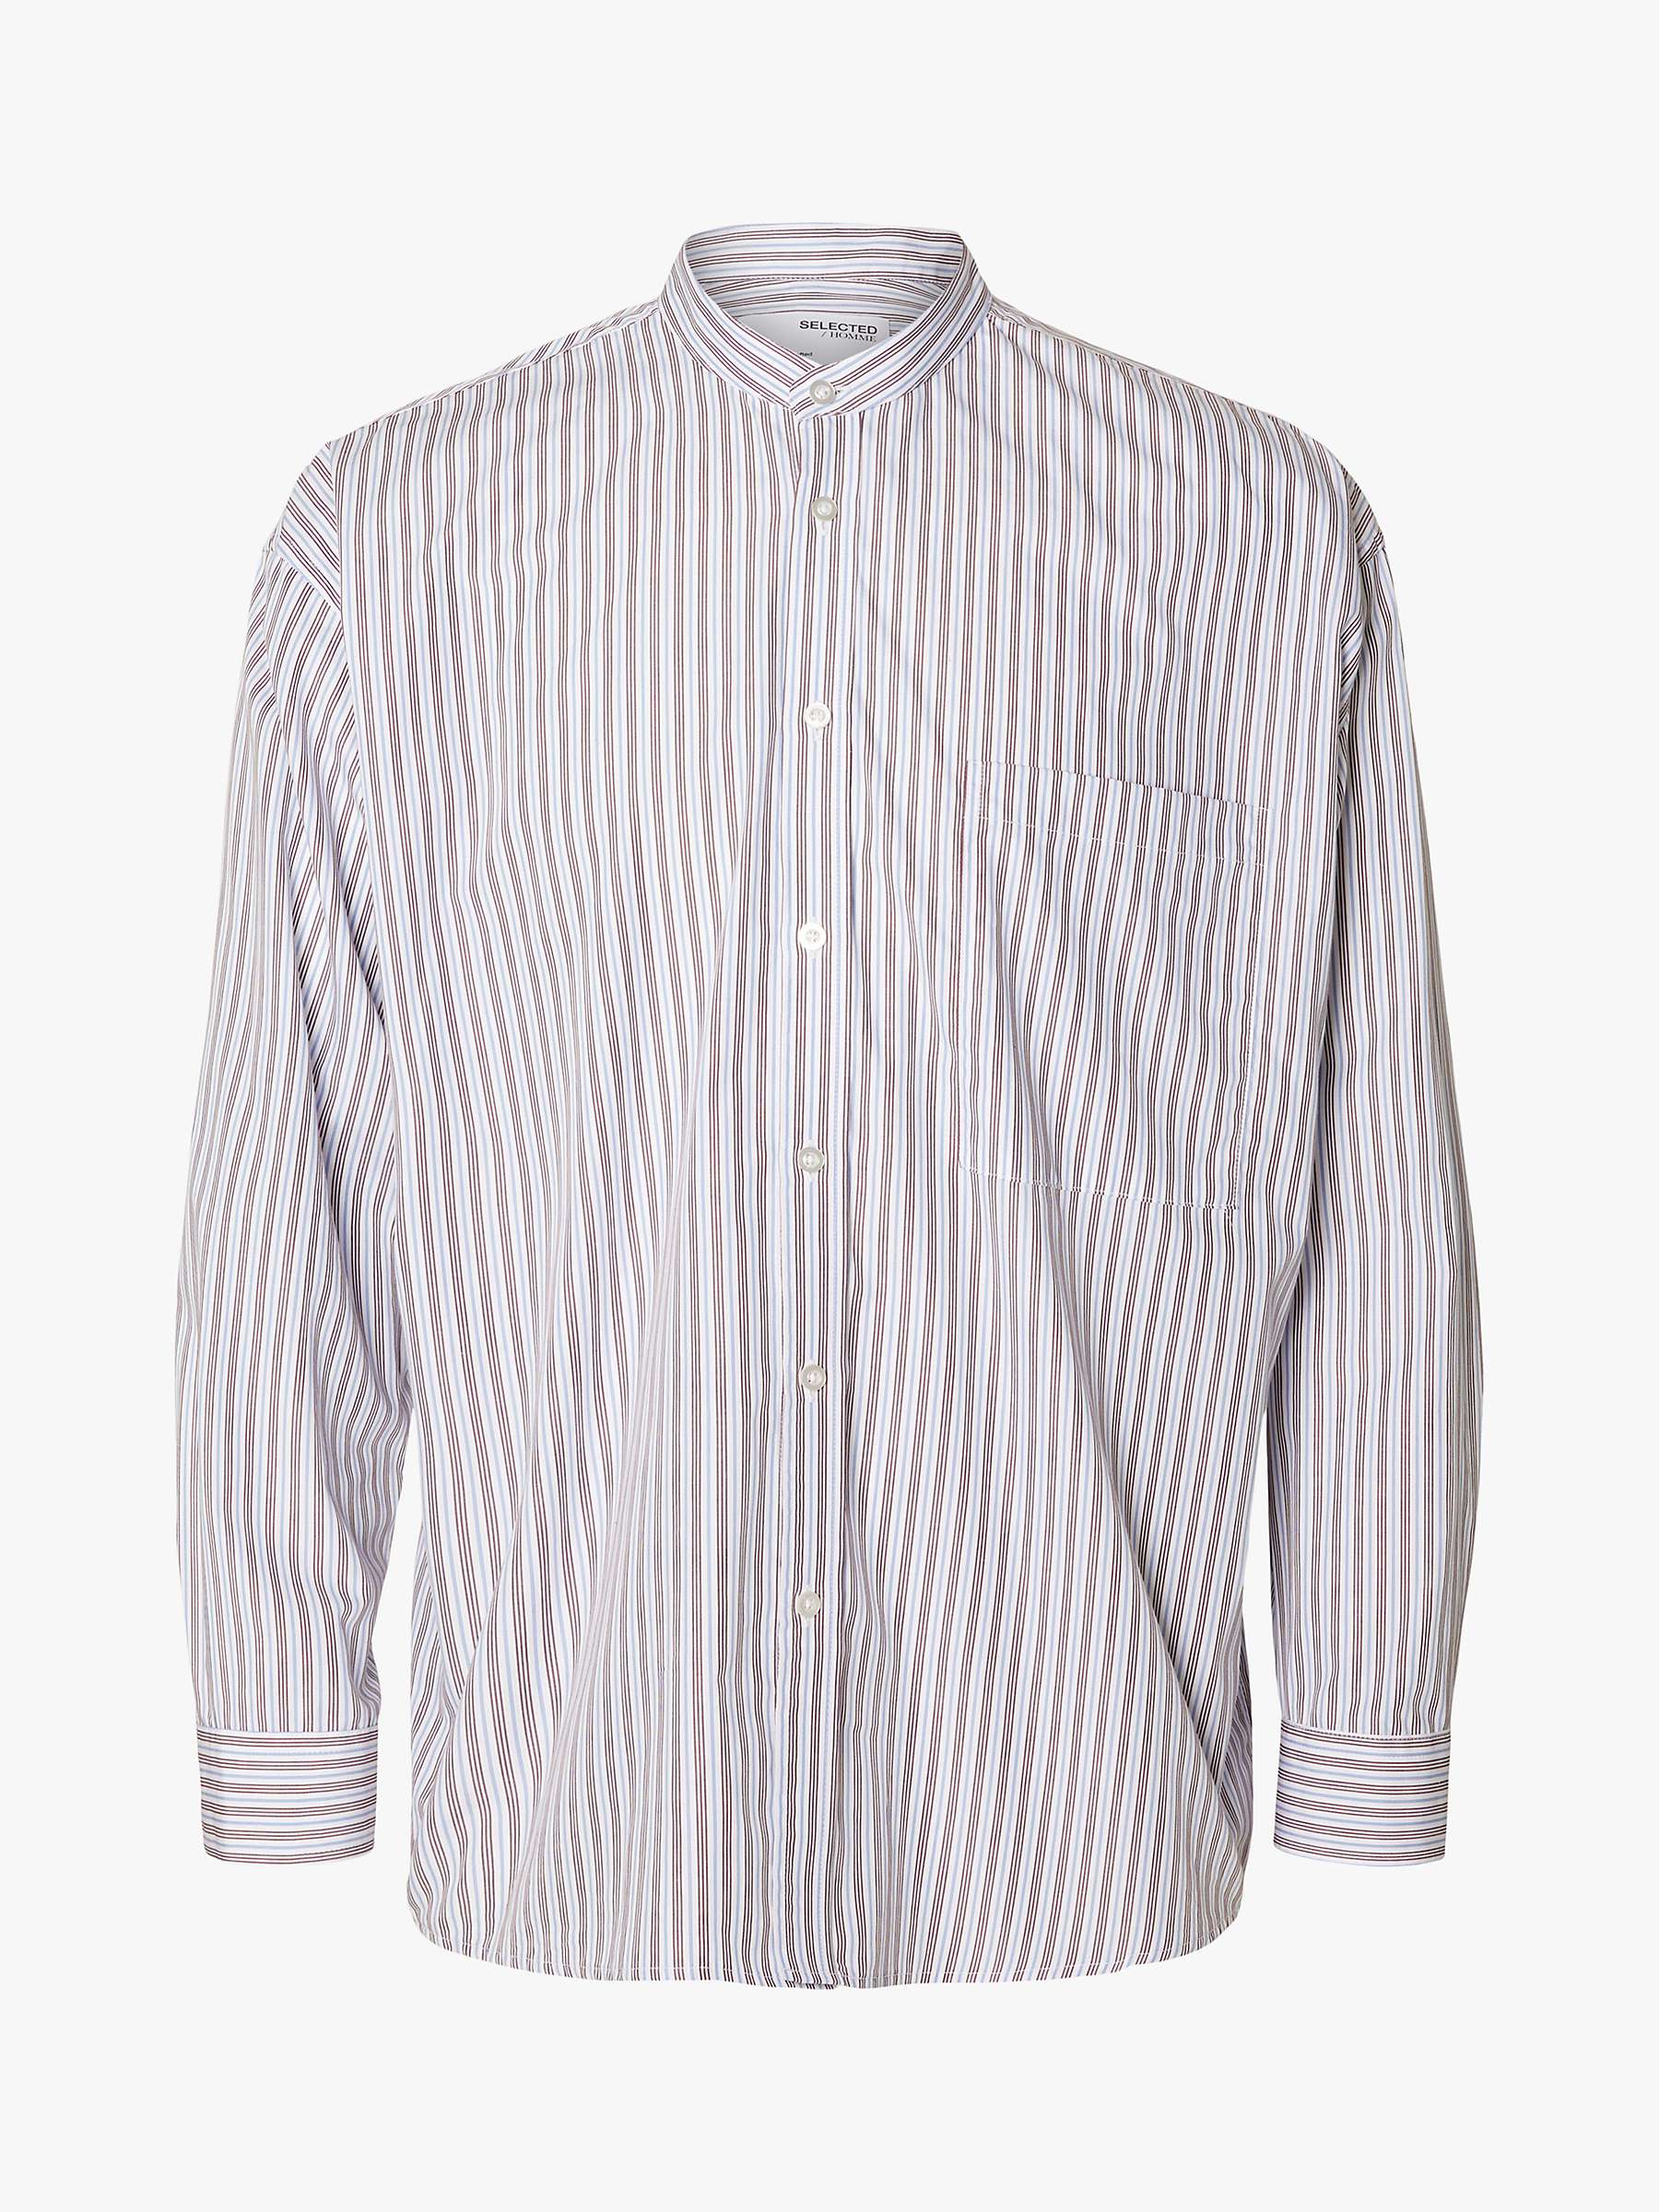 Buy SELECTED HOMME Stripe Formal Long Sleeve Shirt Online at johnlewis.com